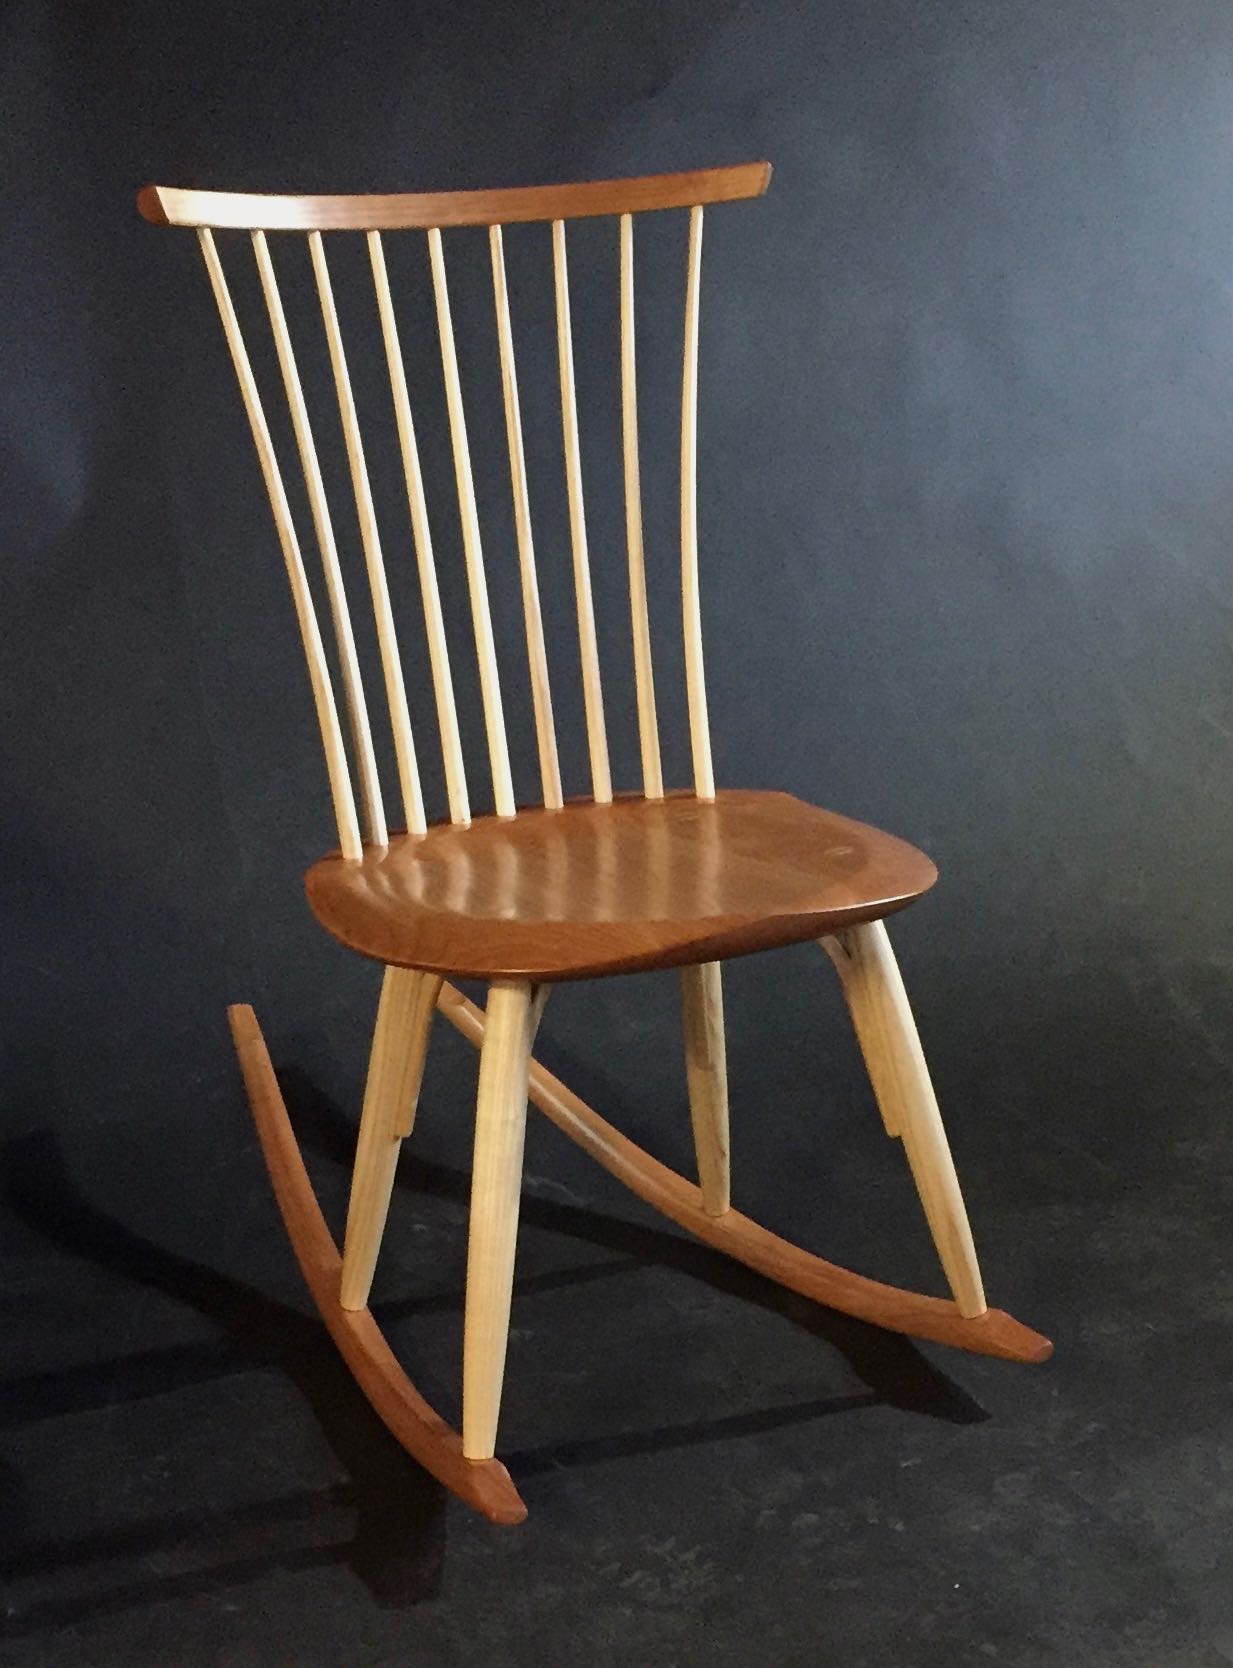 side chair rocker by Timothy Clark